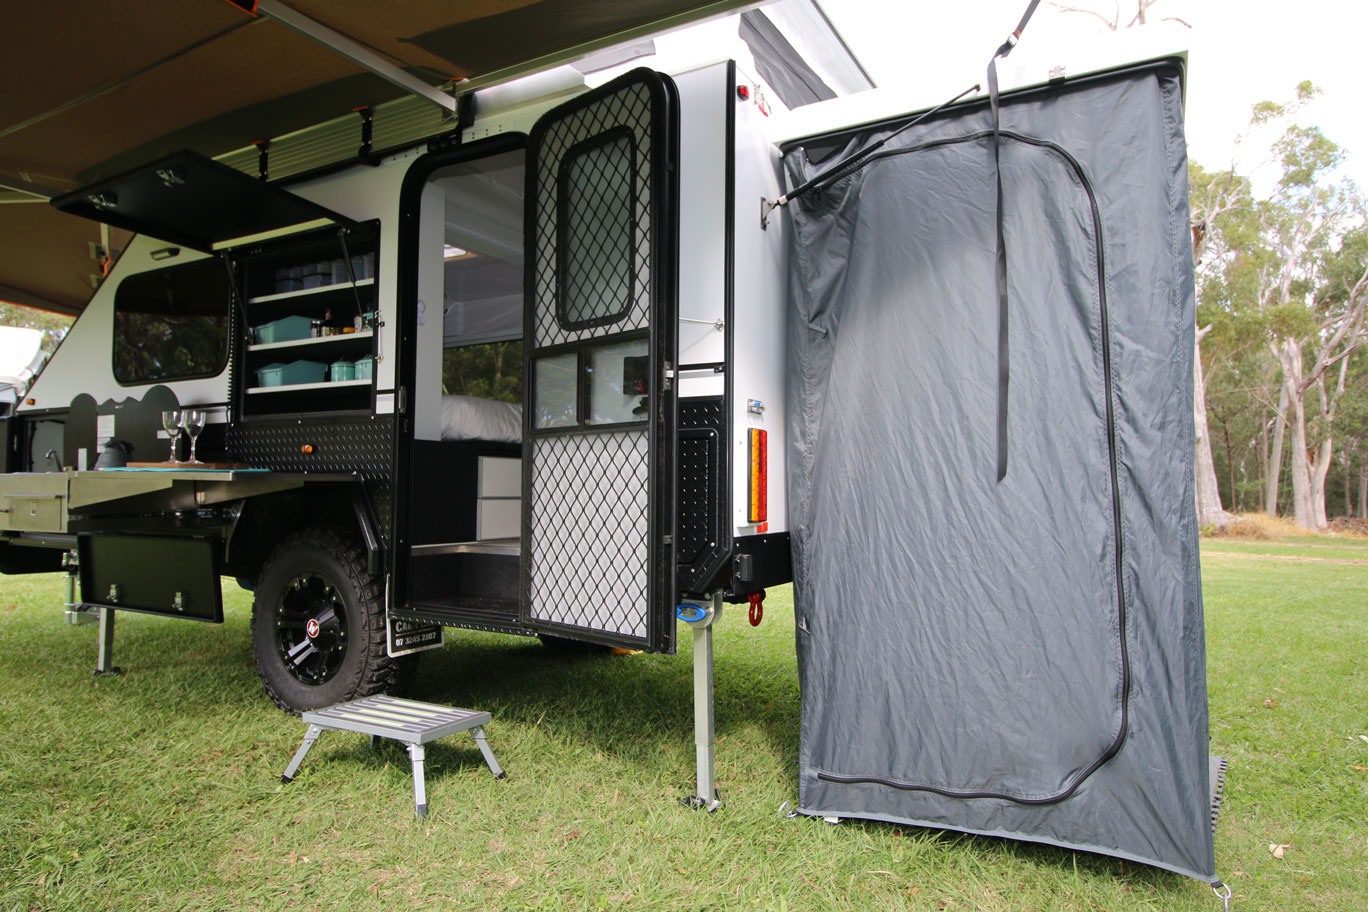 Modcon RV off road hybrid camper trailers C3 shower pod pops up in seconds